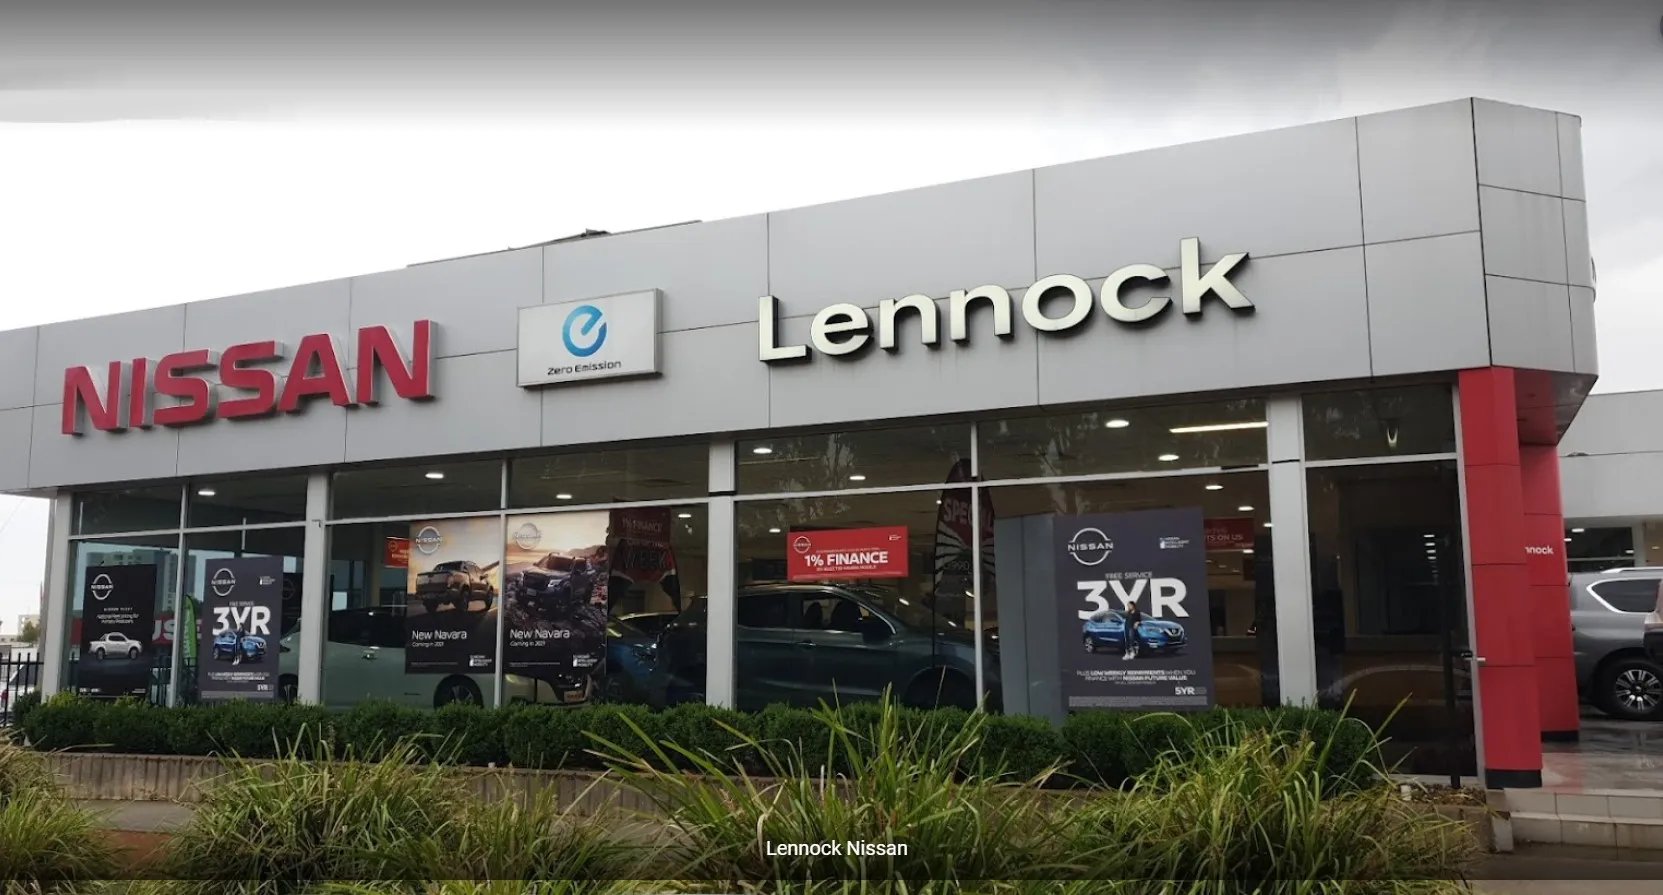 Lennock Nissan